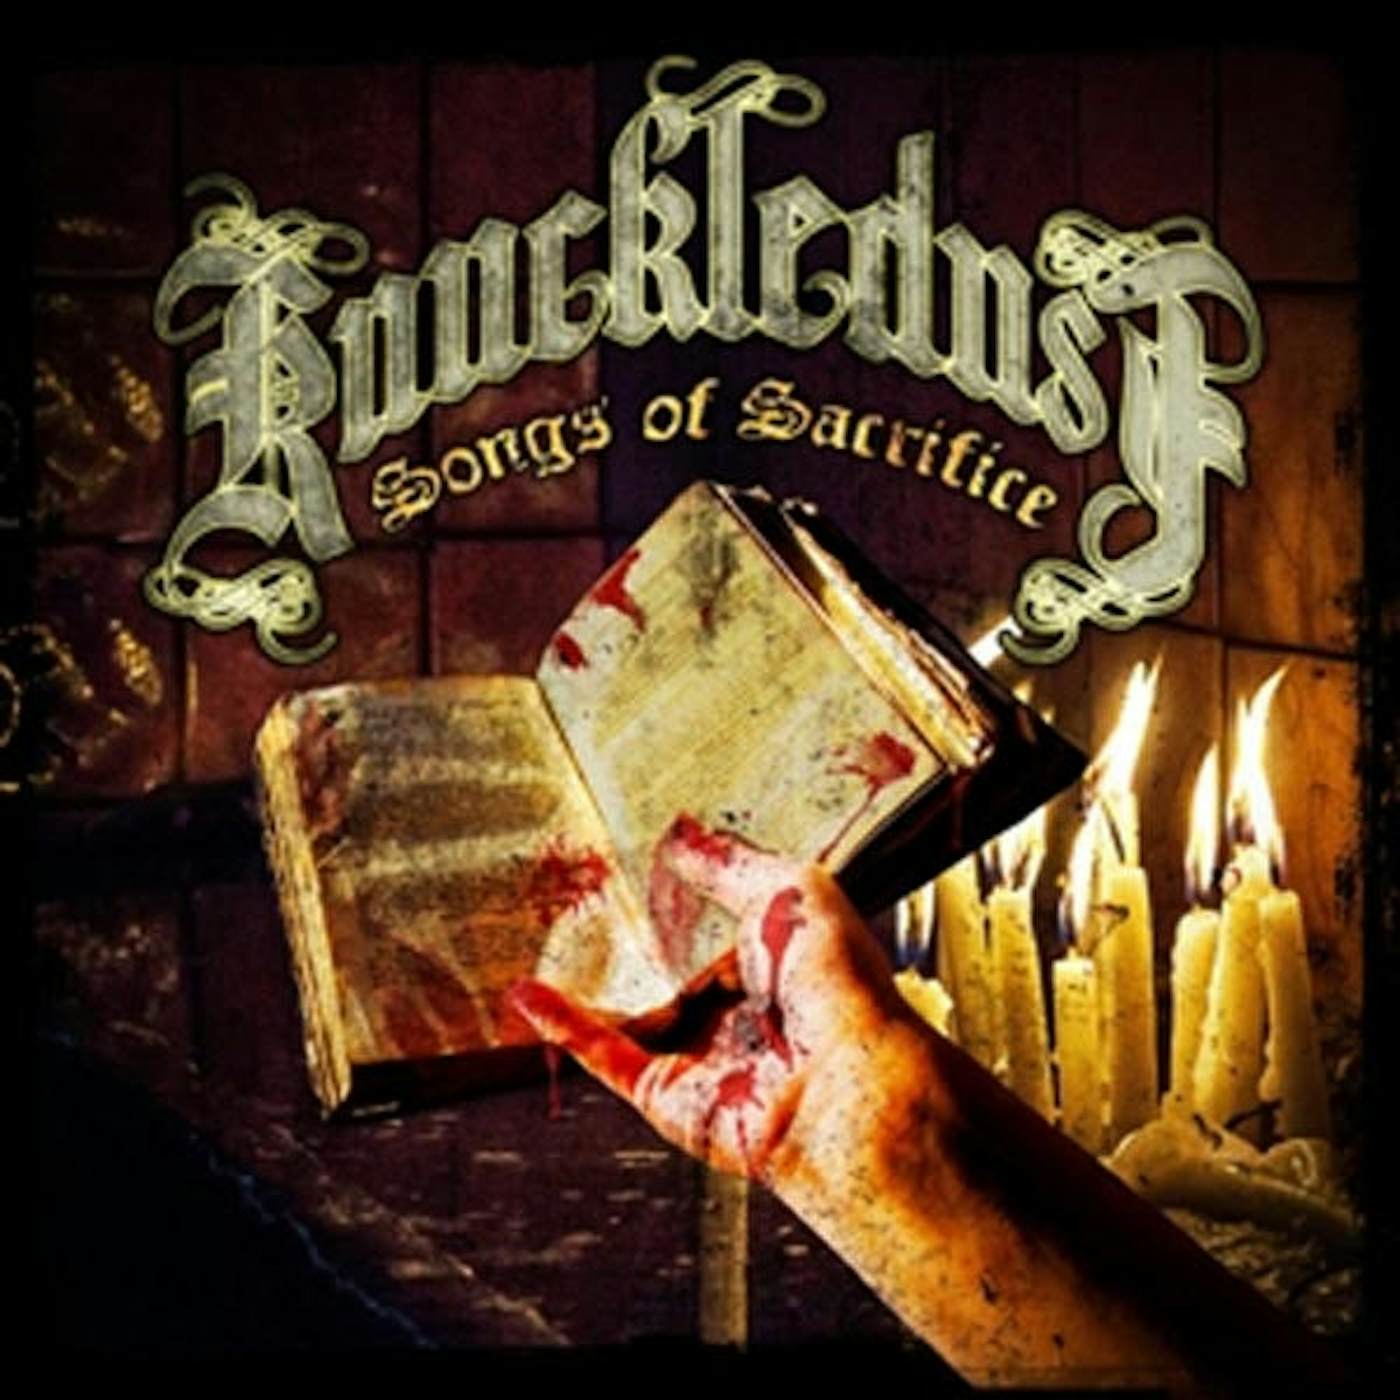 Knuckledust LP - Songs Of Sacrifice (Vinyl)